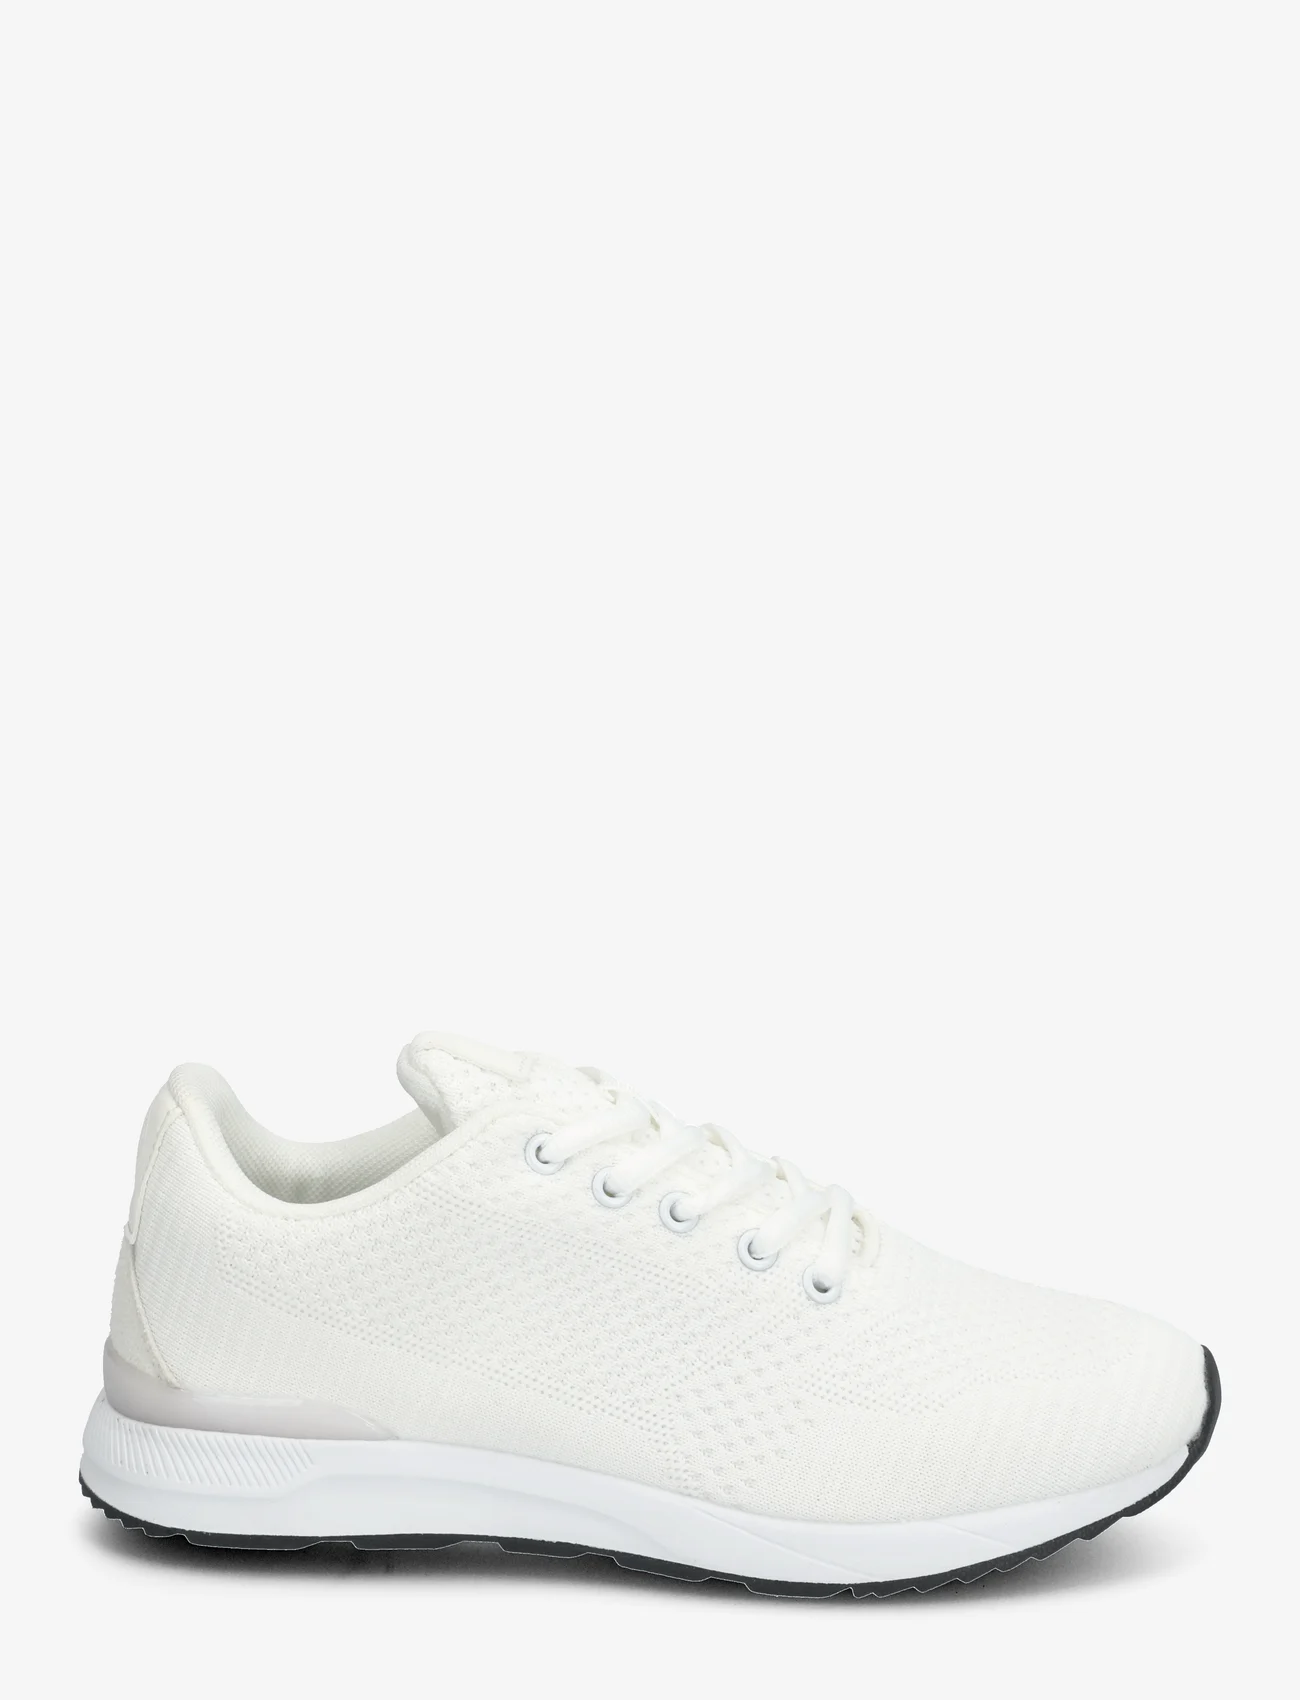 Exani - LUKE JR - niedrige sneakers - white - 1